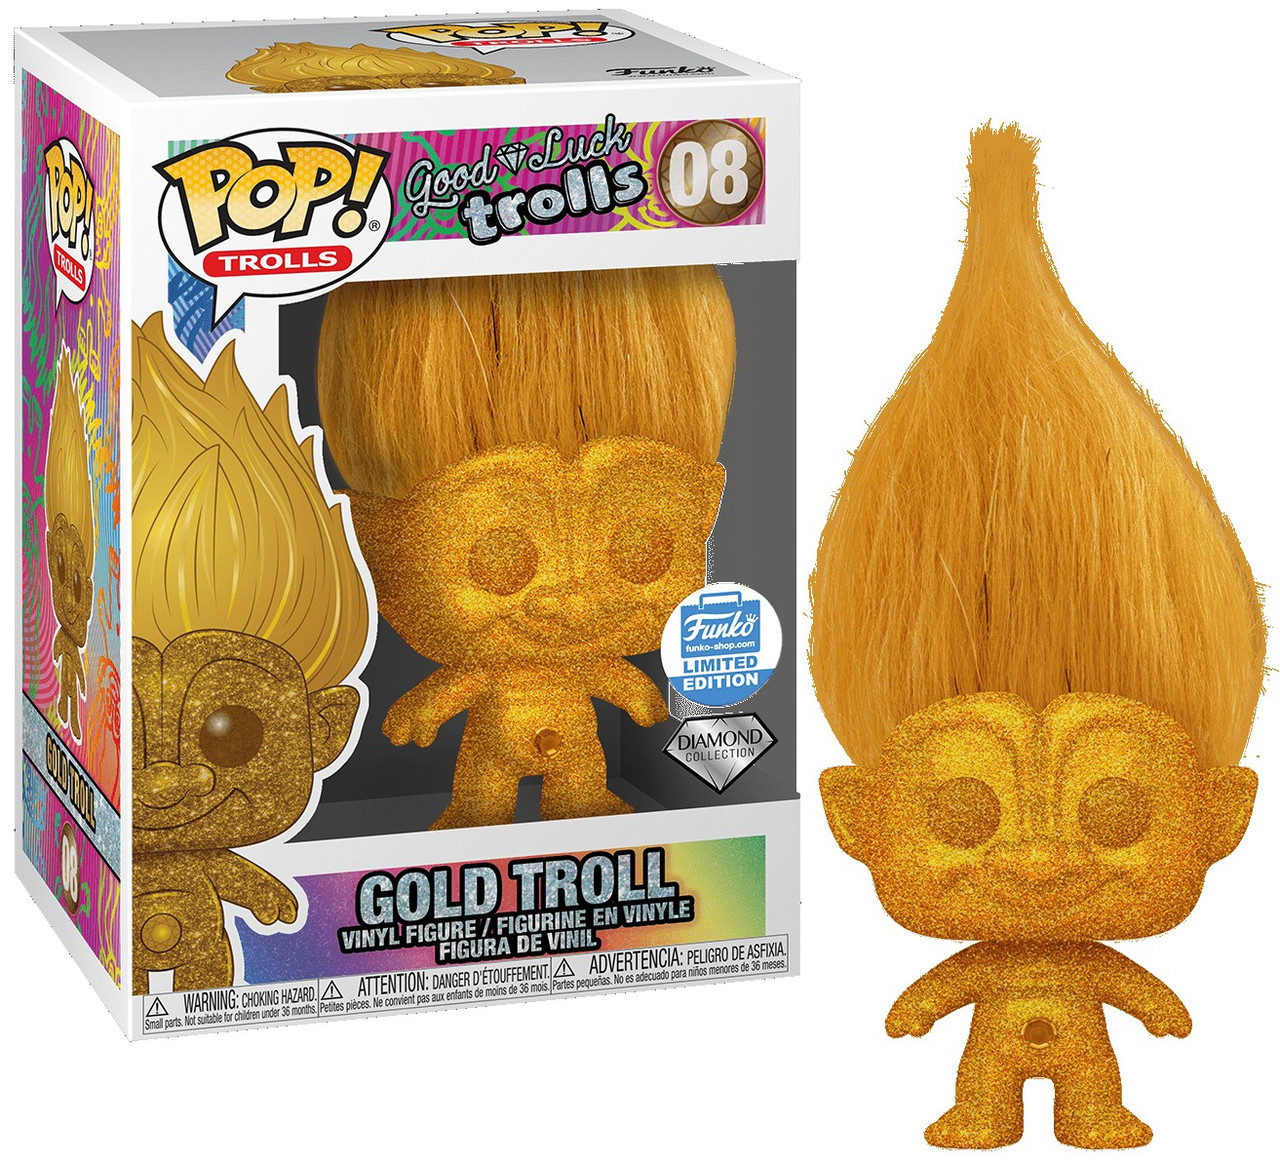 Funko Good Luck Trolls Pop Trolls Gold Troll Exclusive Vinyl Figure 08 Diamond Collection Toywiz - troll soda roblox